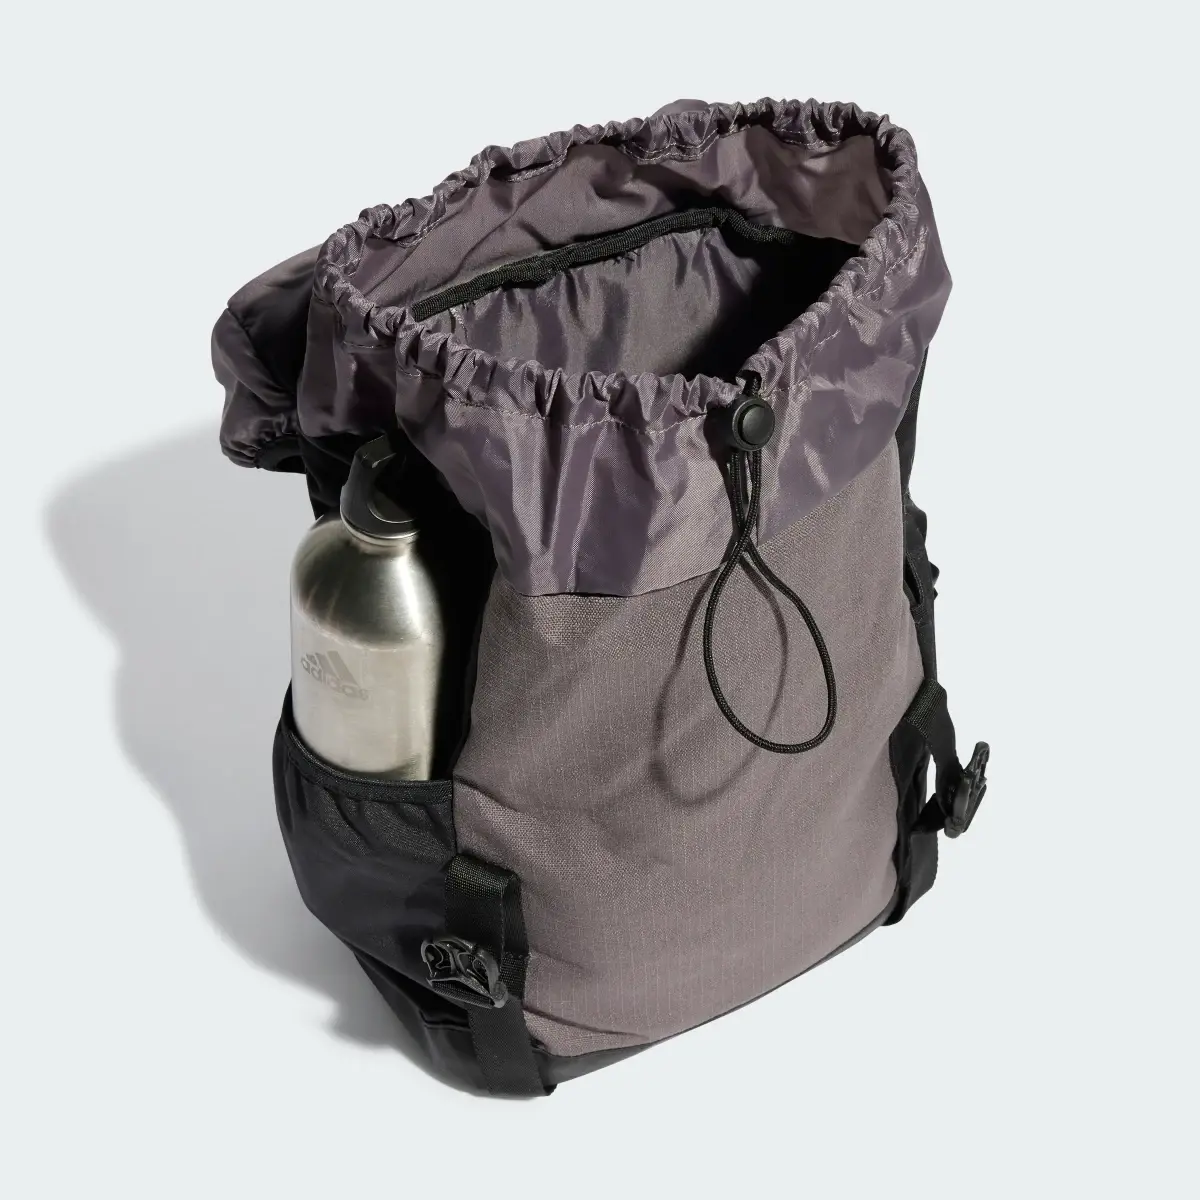 Adidas Xplorer Backpack. 3